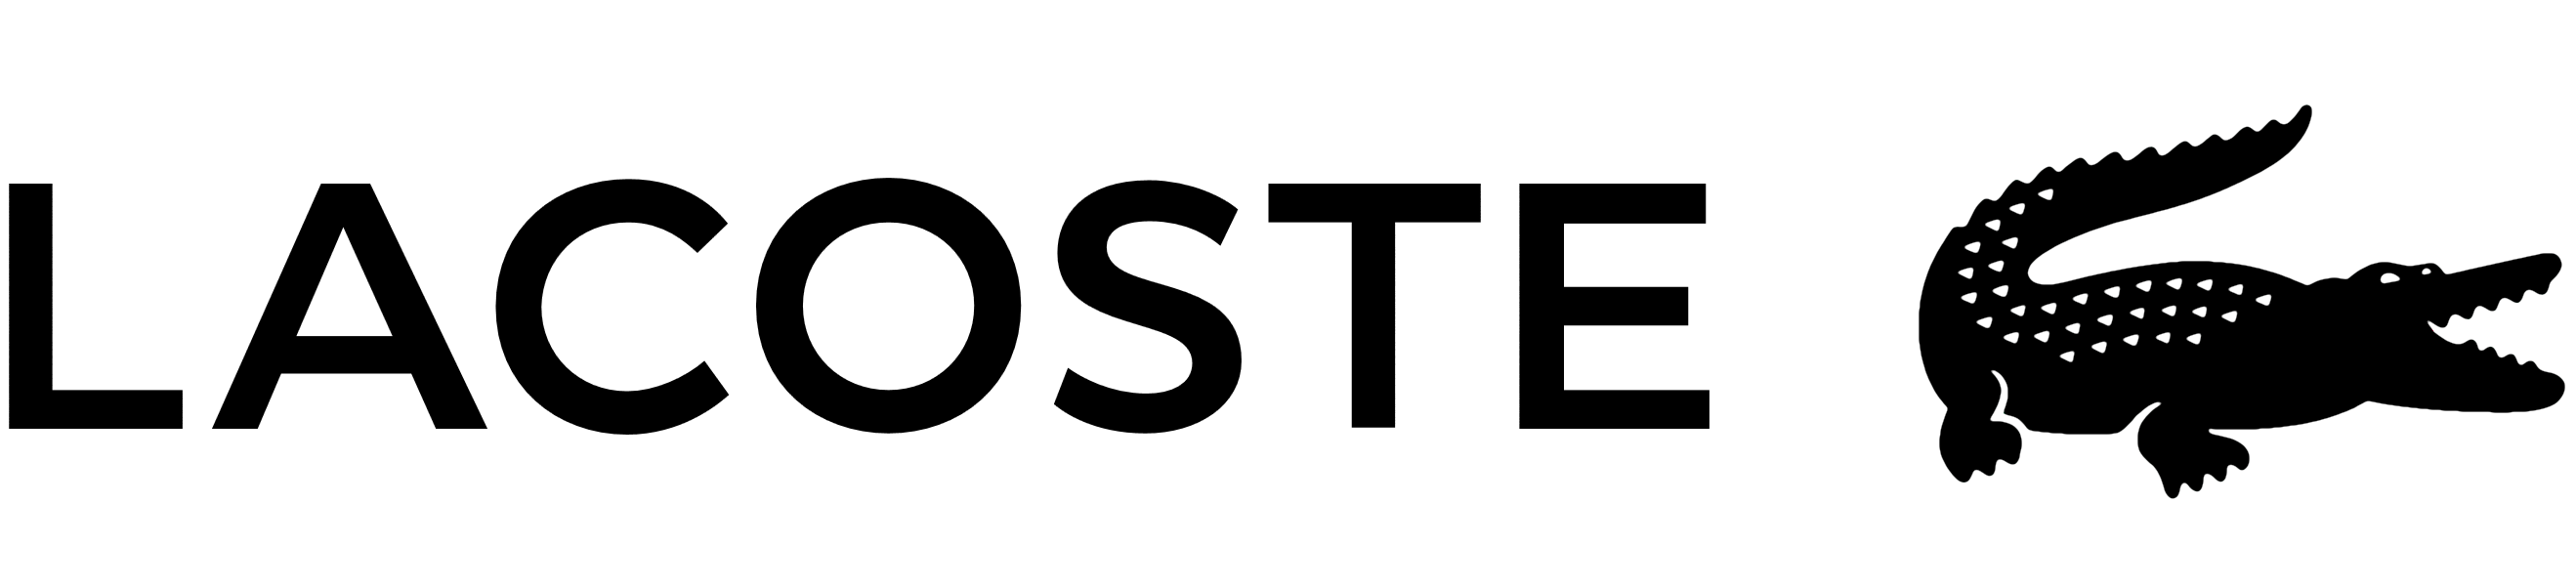 lacoste logo black